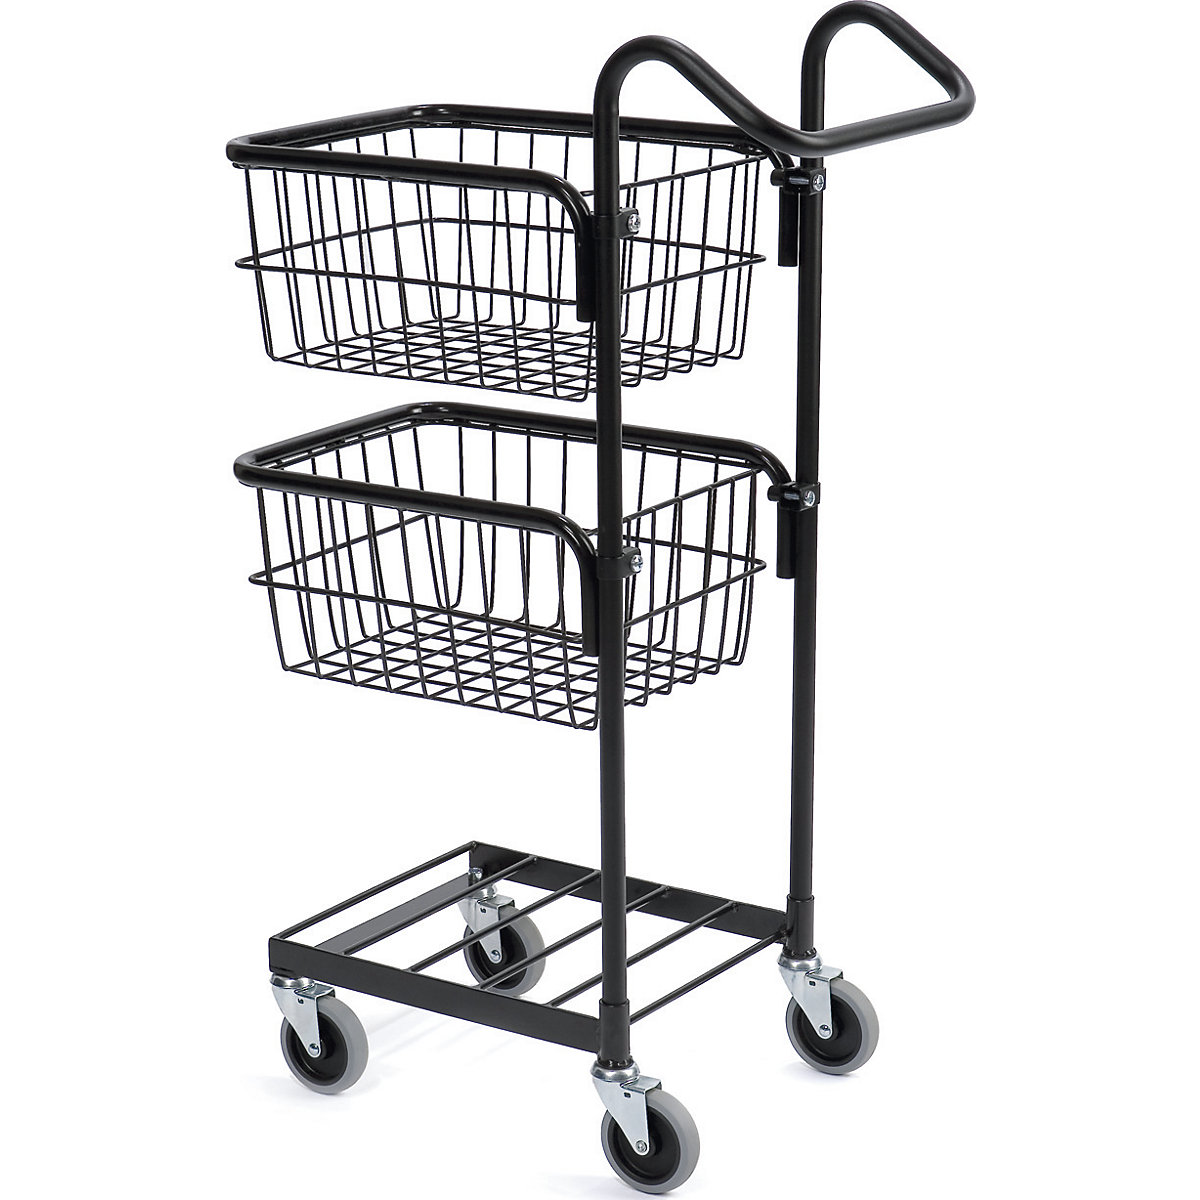 KOMPAKT retail bin – HelgeNyberg, 2 baskets, black frame, 5+ items-7